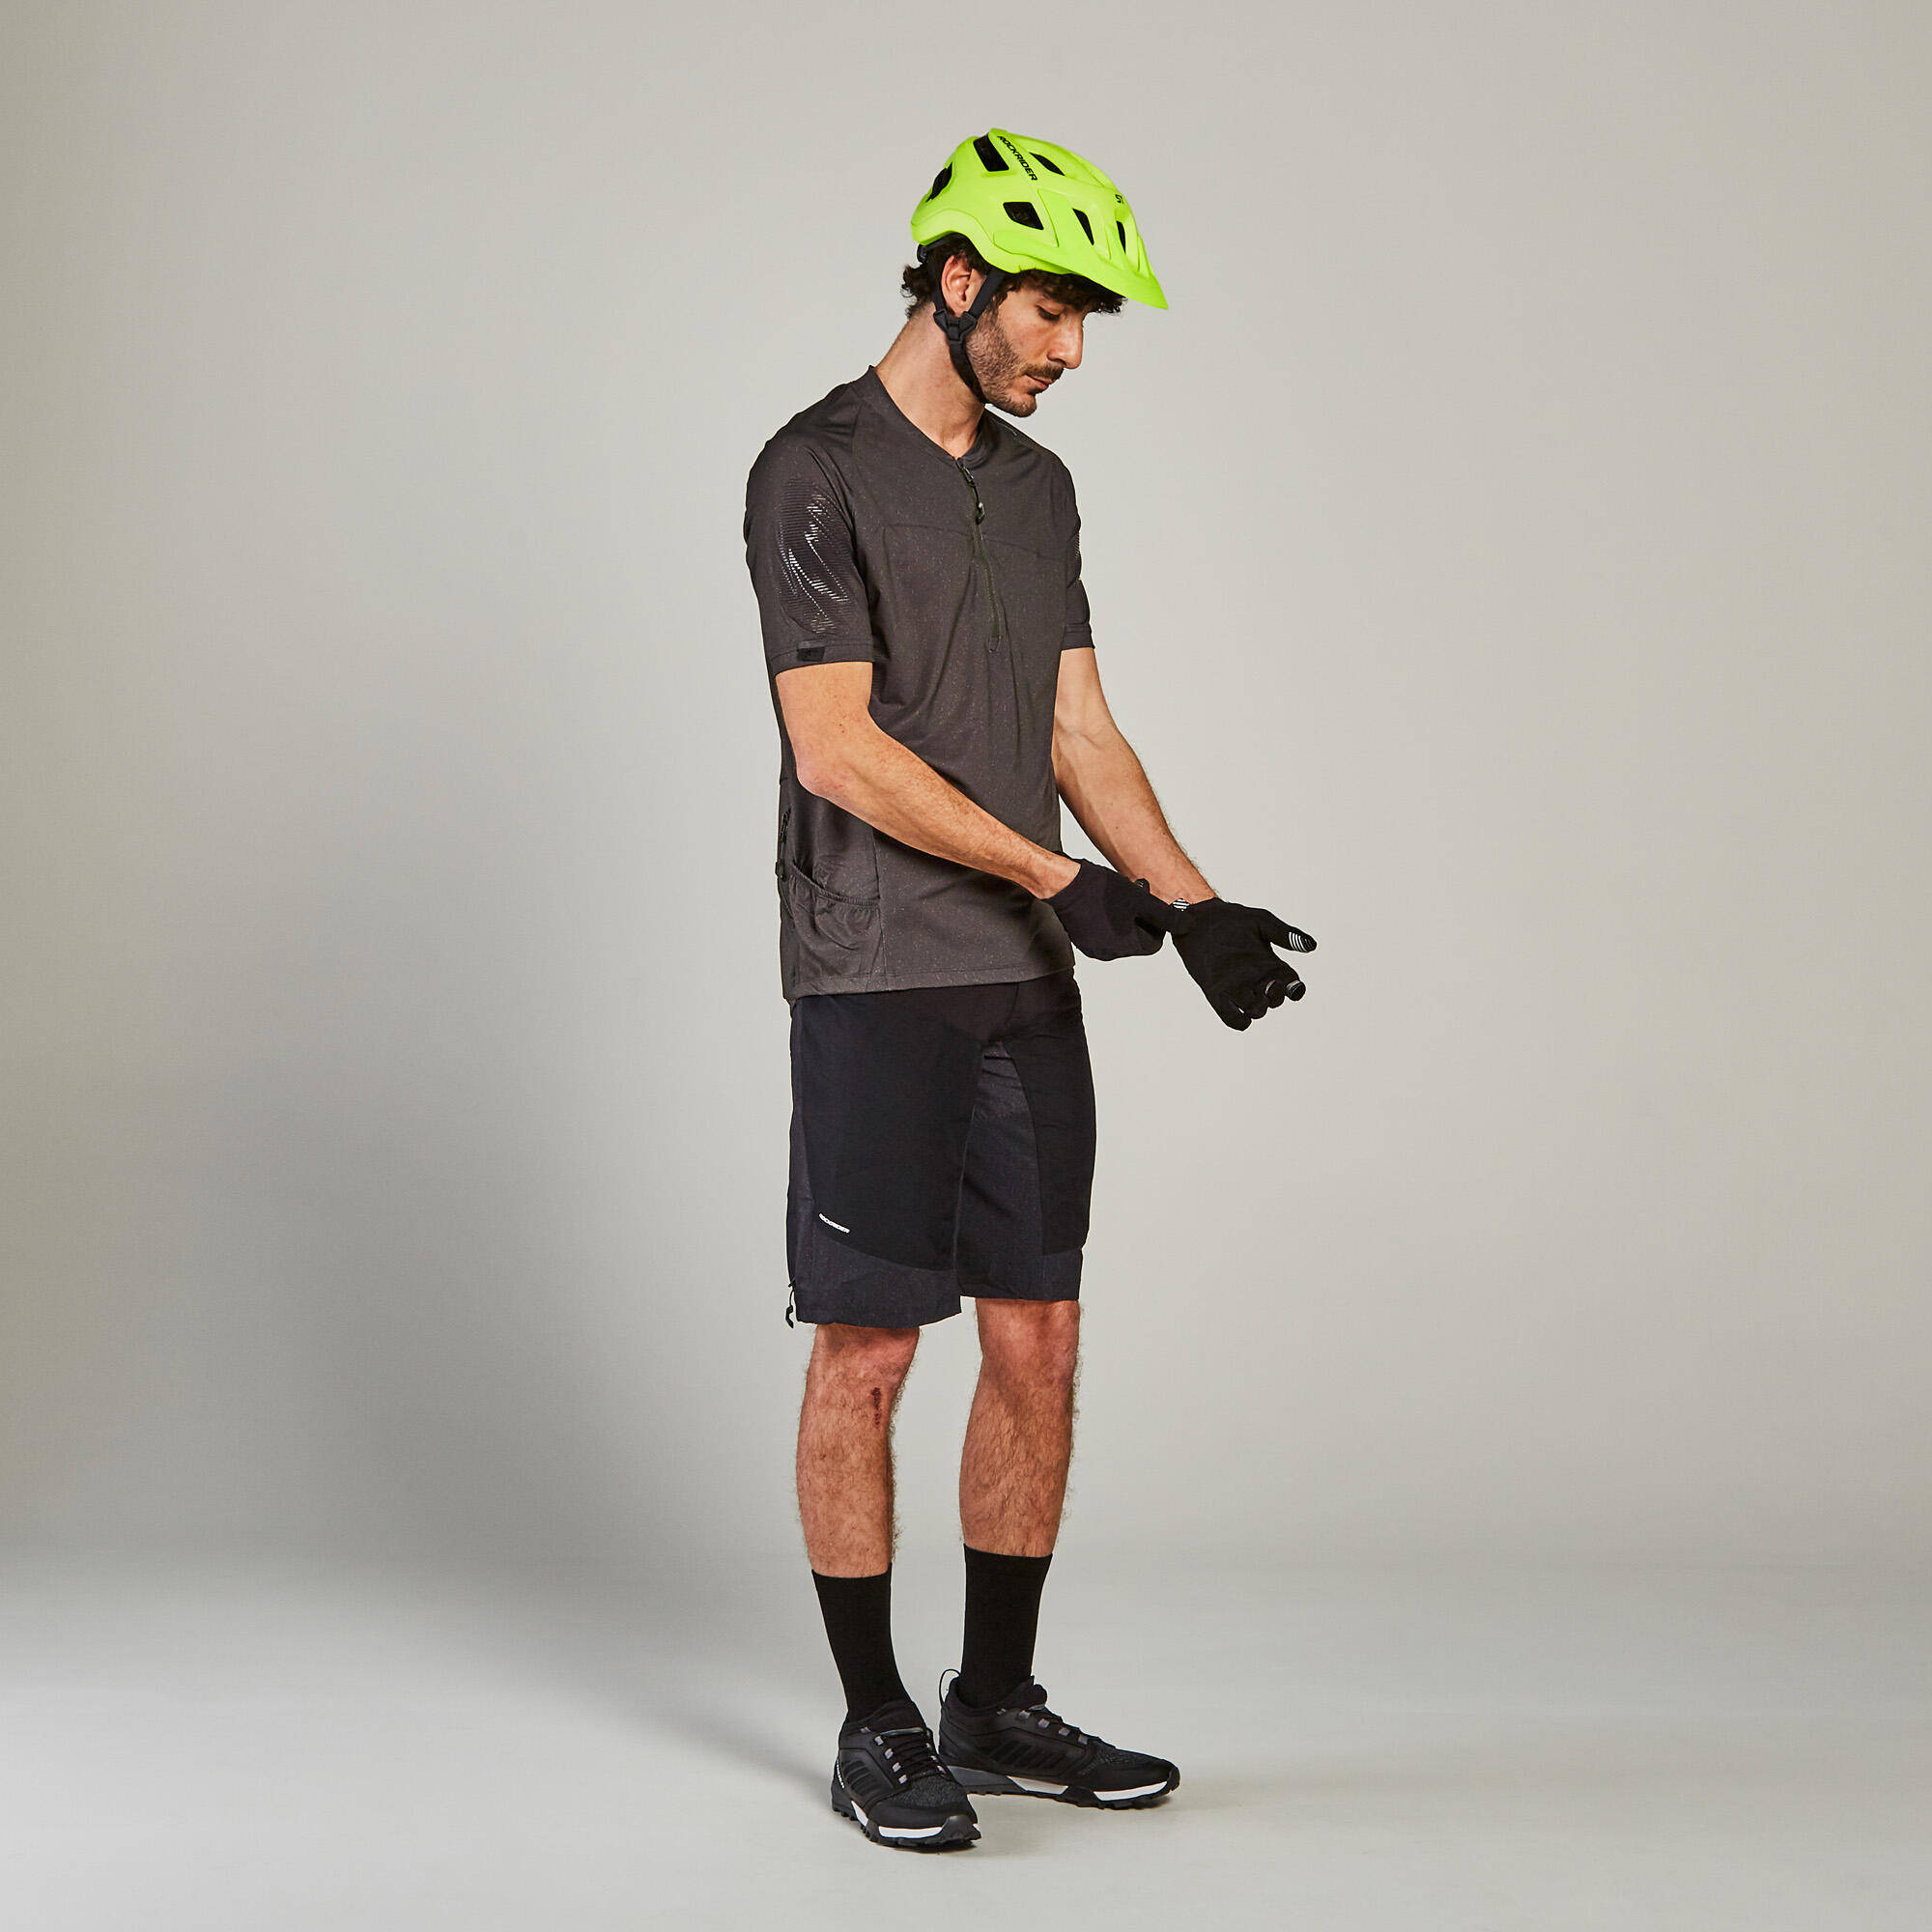 Mountain Biking Helmet EXPL 500 - Neon Yellow 10/18